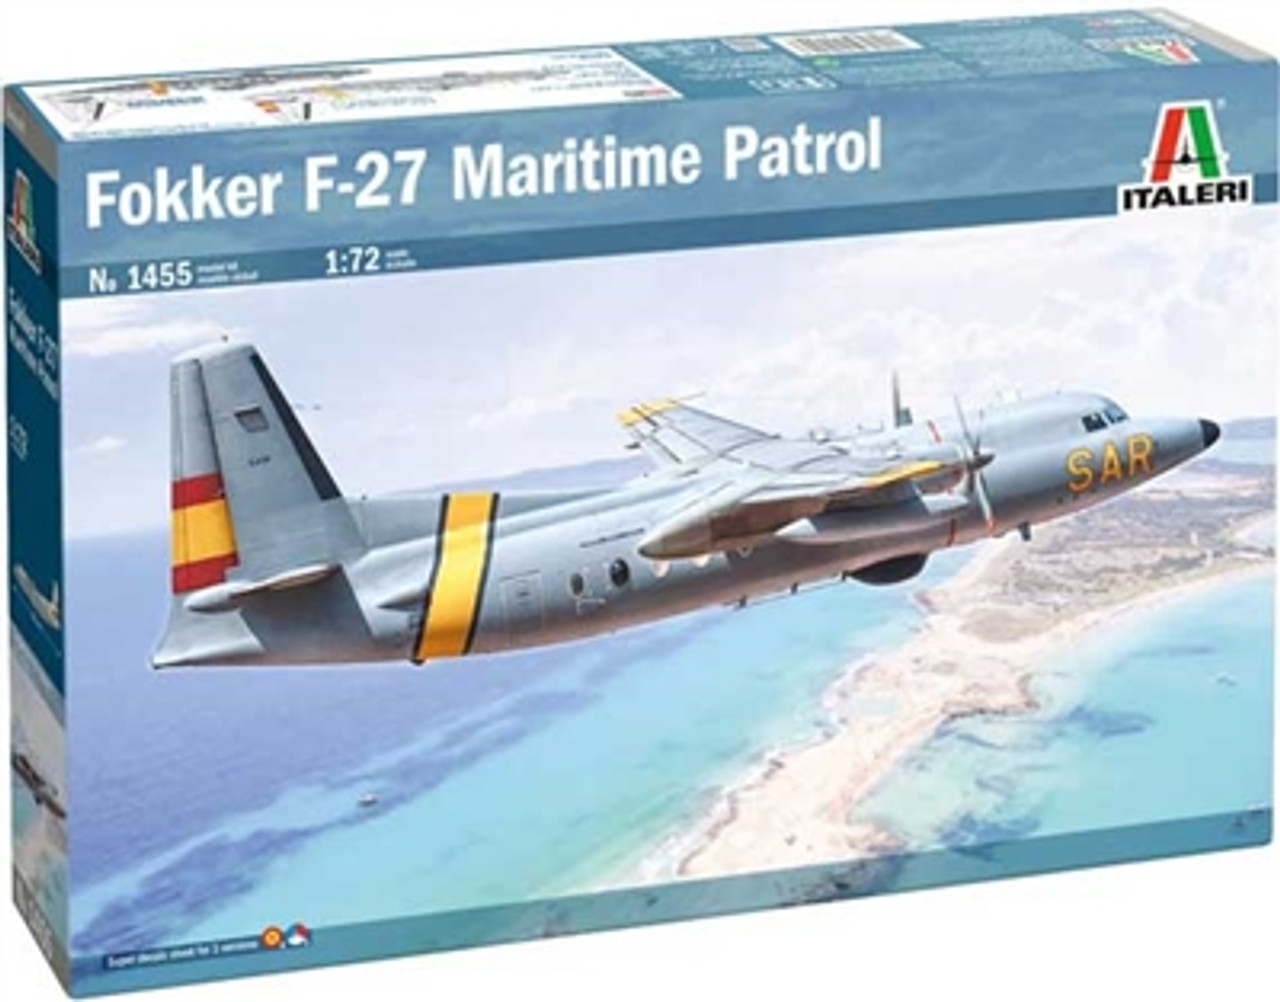 Italeri 1455 1/72 Fokker F-27 Maritime Patrol Aircraft Plastic Model Kit